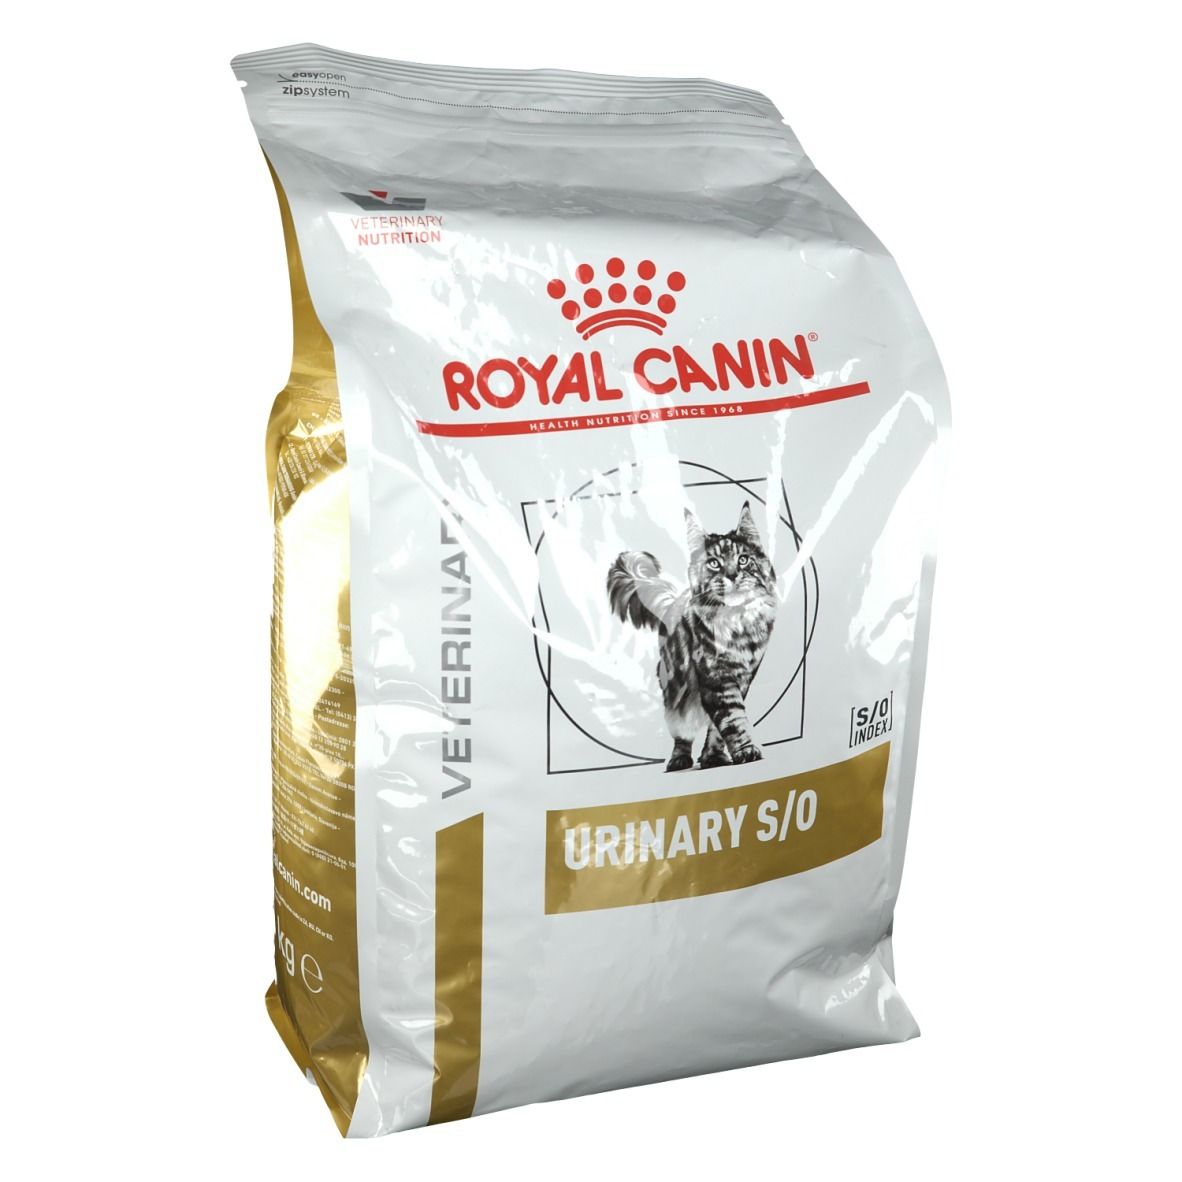 ROYAL CANIN® Urinary S/O Katze